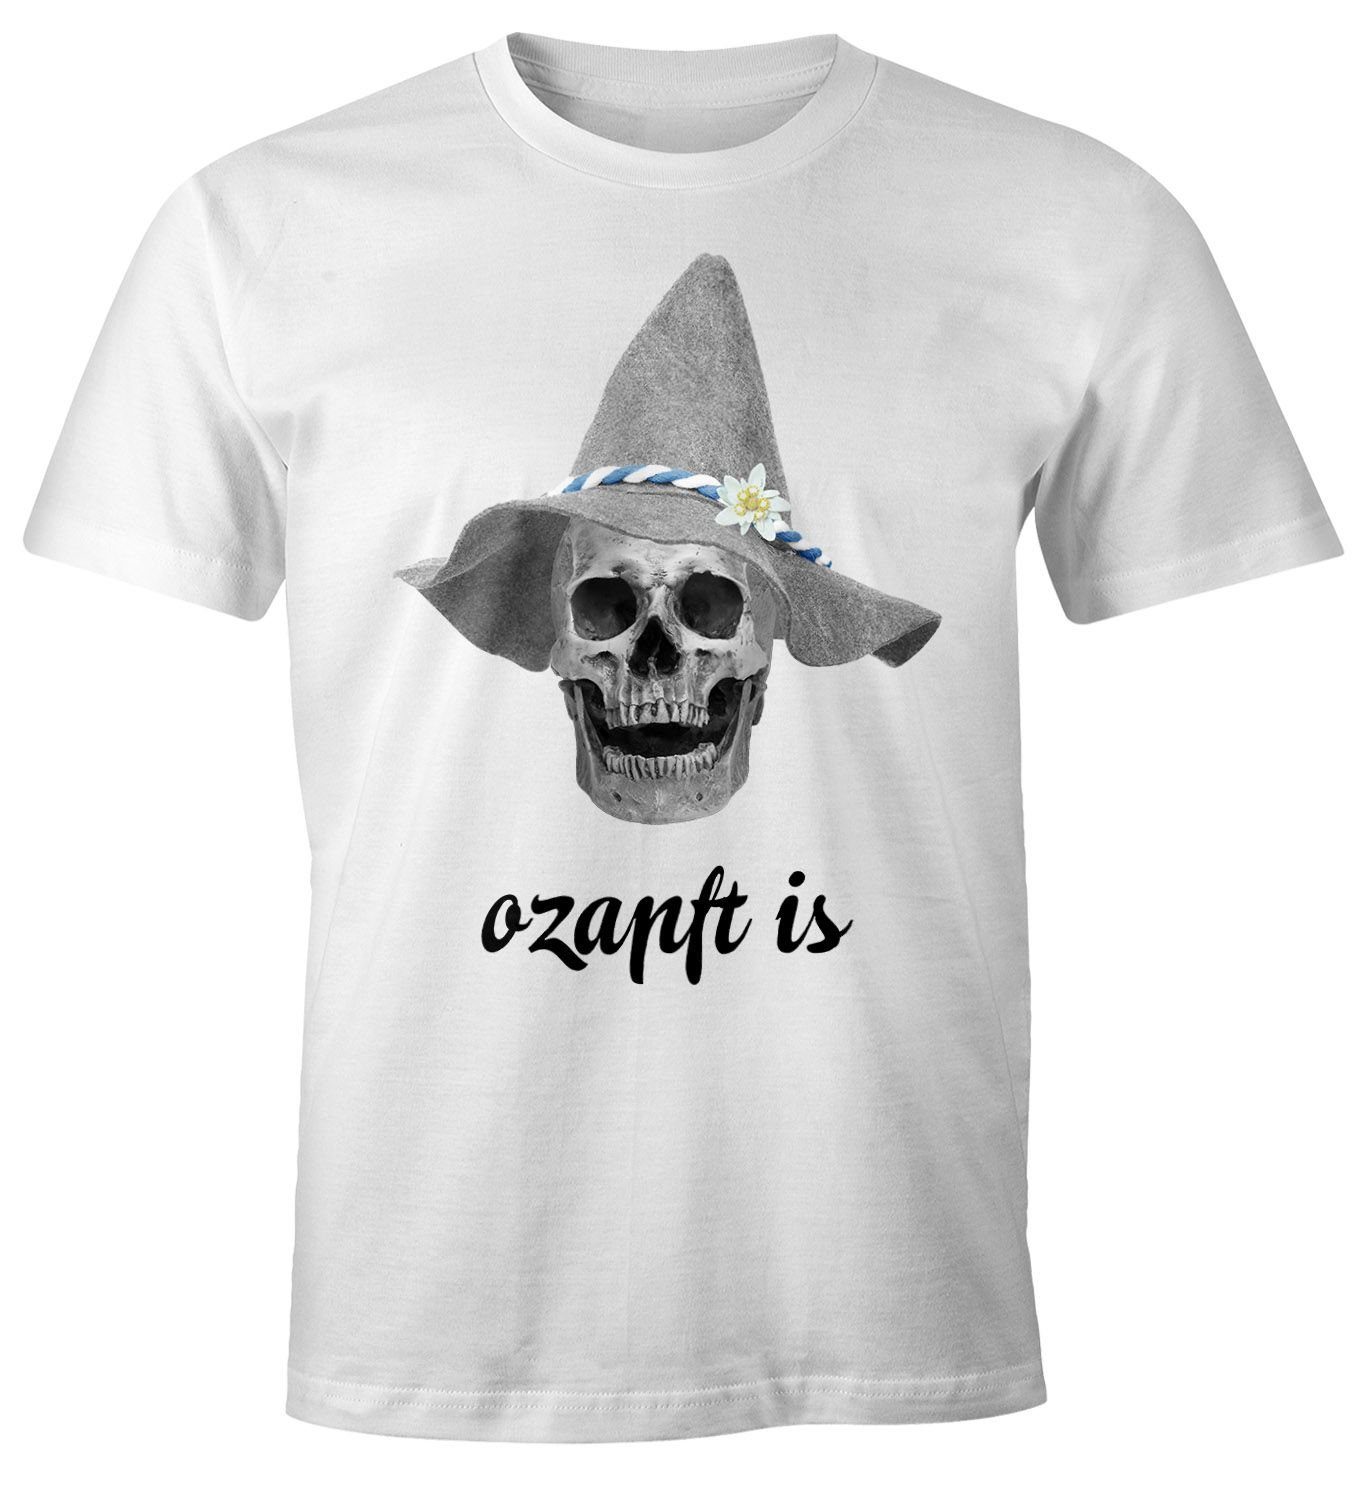 MoonWorks Print-Shirt T-Shirt Volksfest Print Totenkopf is Filzhut ozapft Moonworks® Bayrisch Bayern Skull mit Fun-Shirt Herren